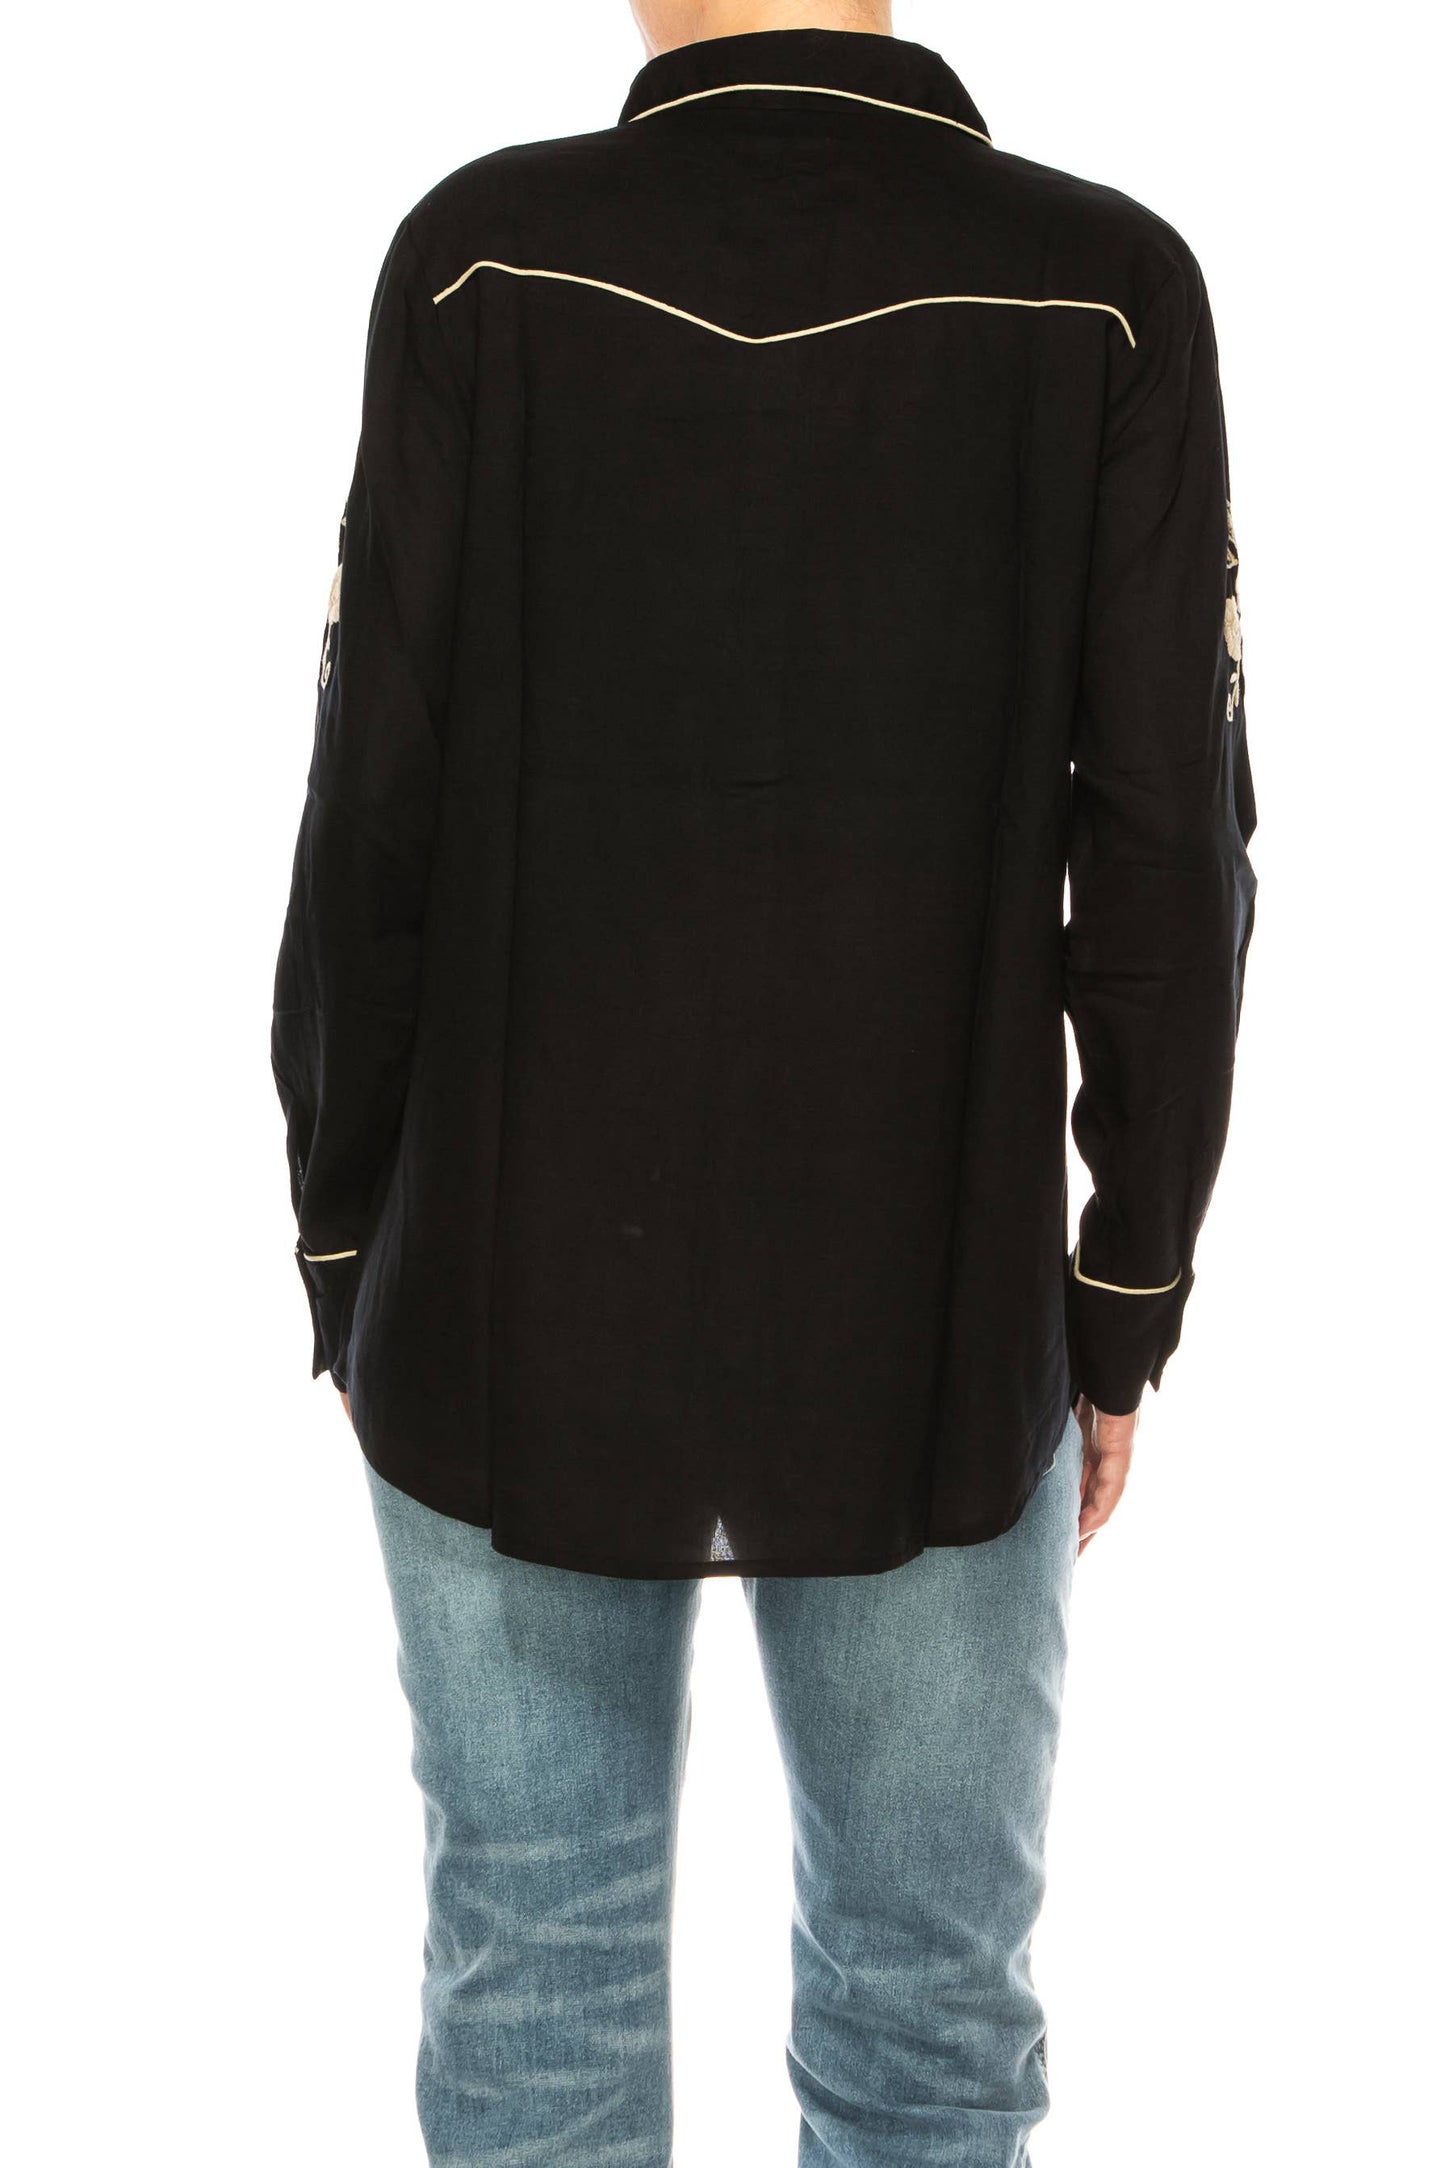 Magazine Clothing - Black Western Shirt with Embroidery: Large